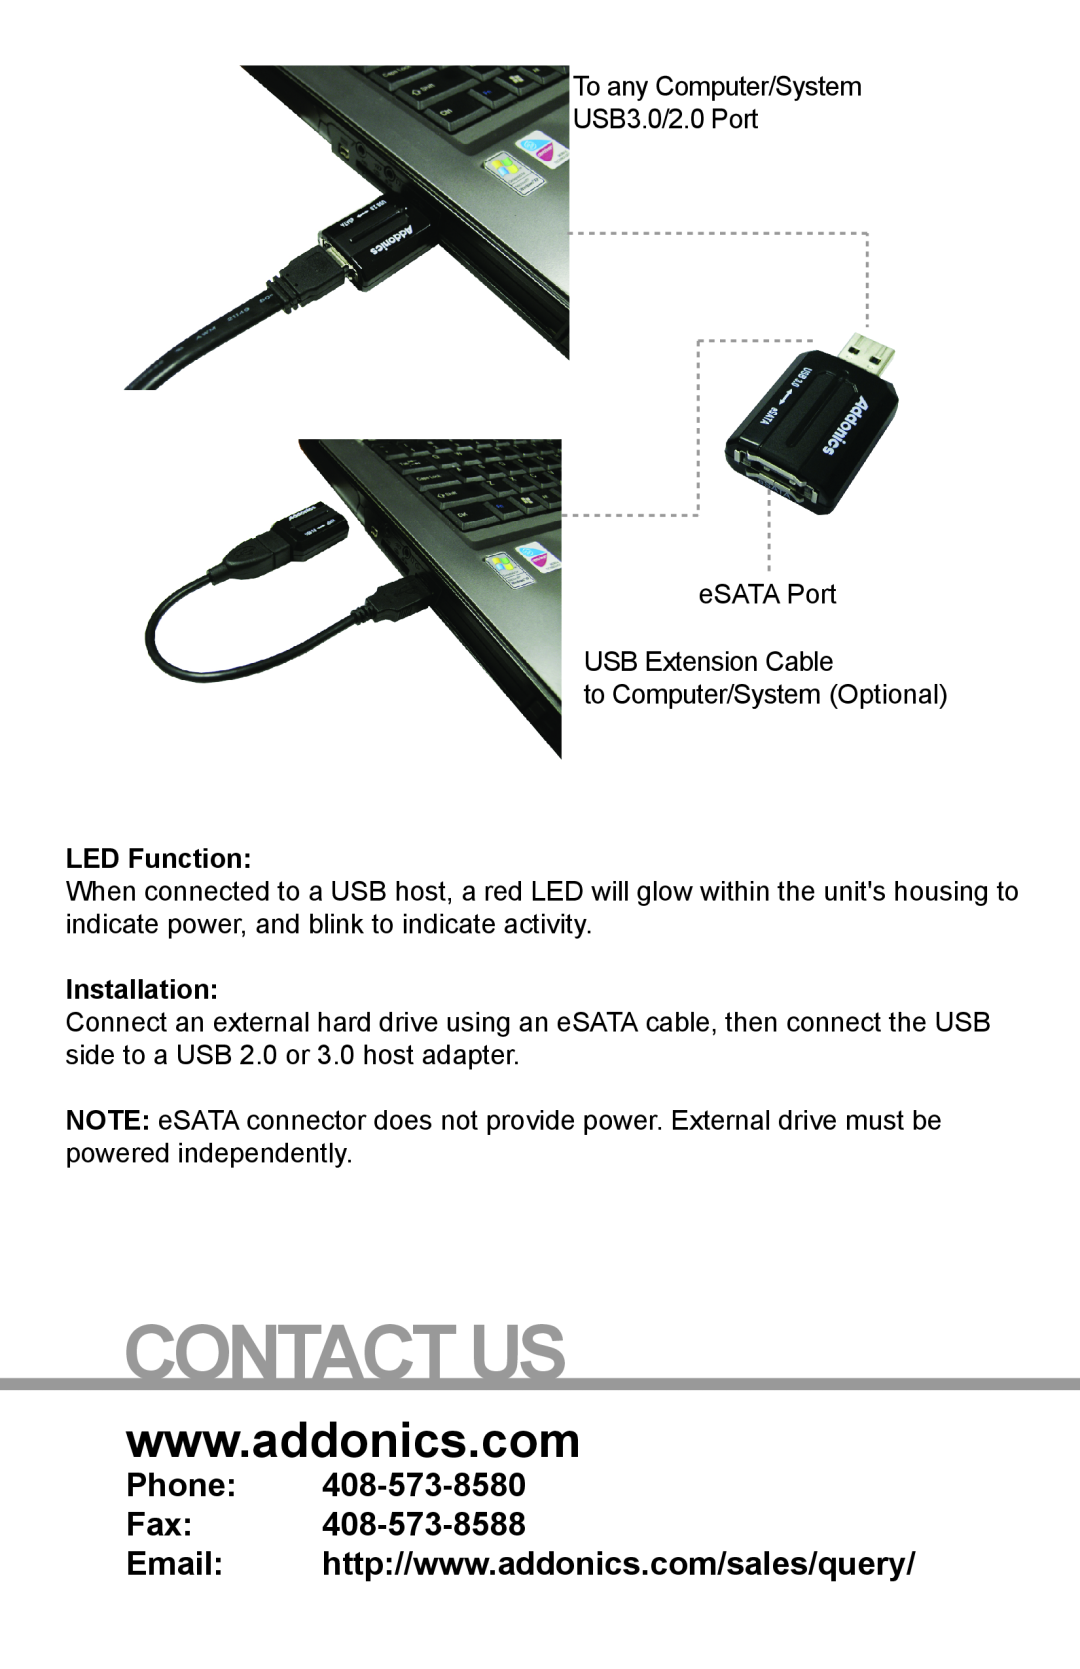 Addonics Technologies ADU3ESAM manual LED Function, Installation, Contact Us, Phone Fax 